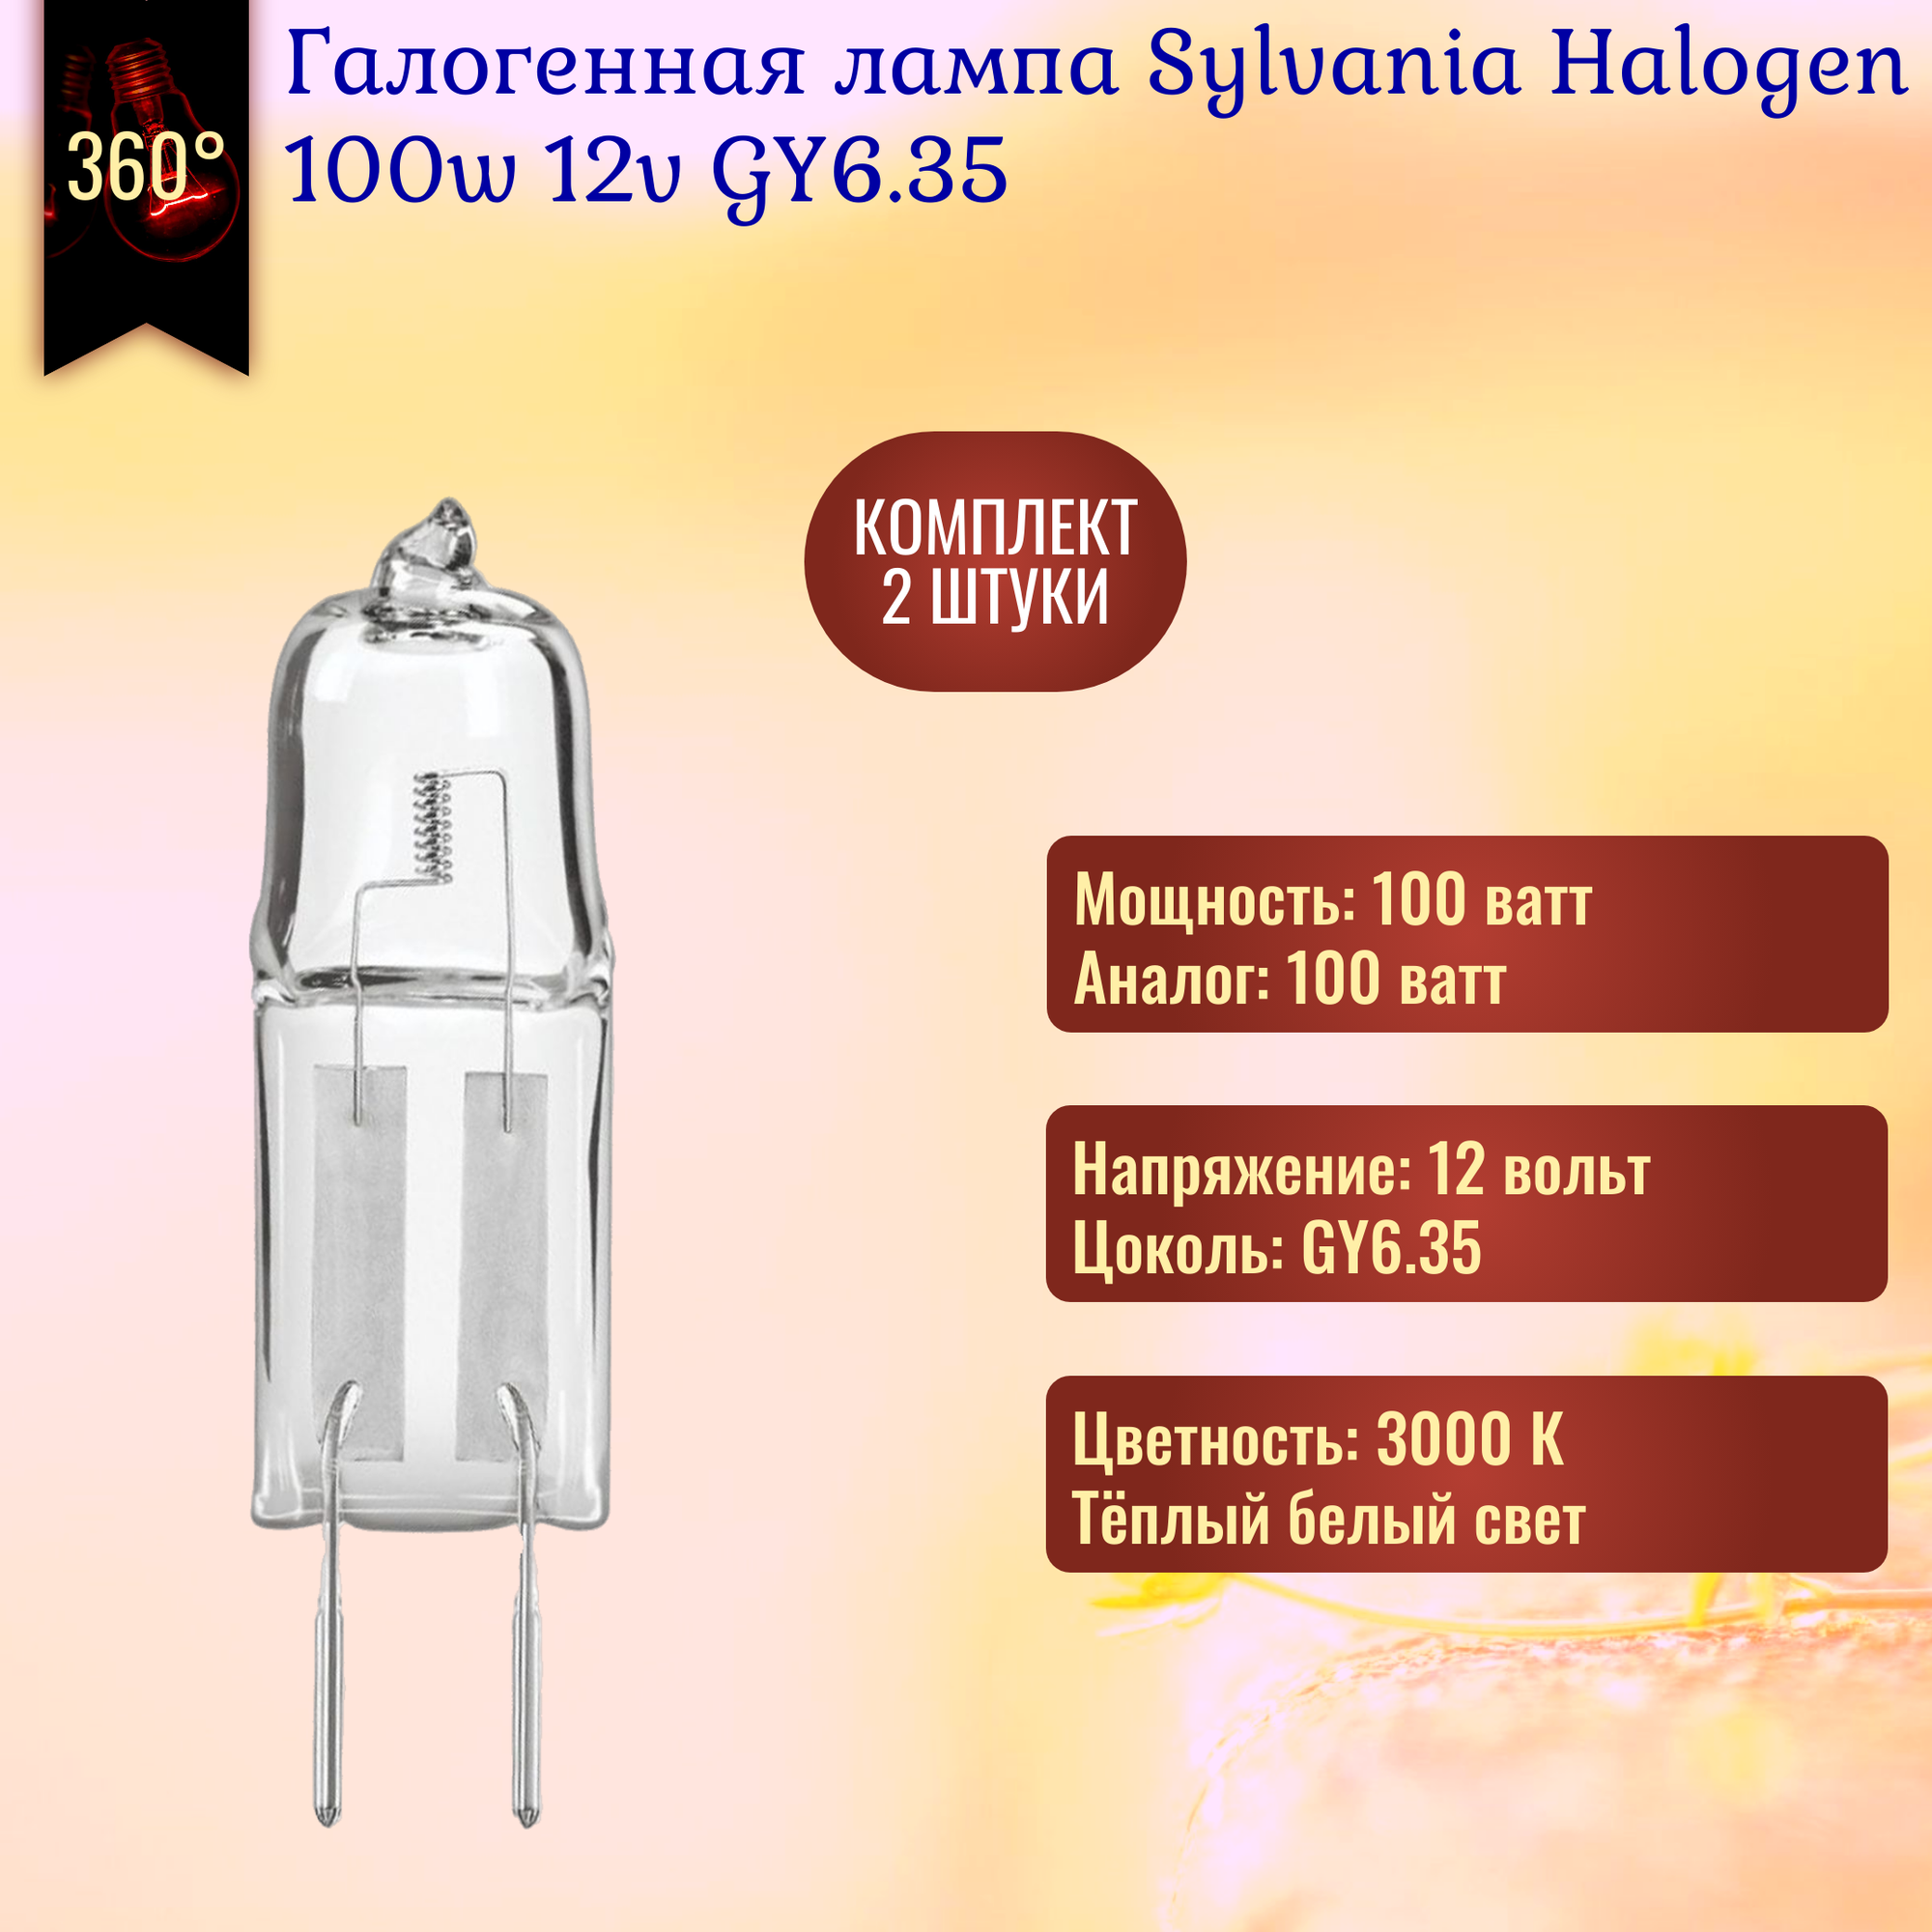 Лампочка Sylvania Halogen 100w 12v GY6.35 галогенная, теплый белый свет / 2 штуки